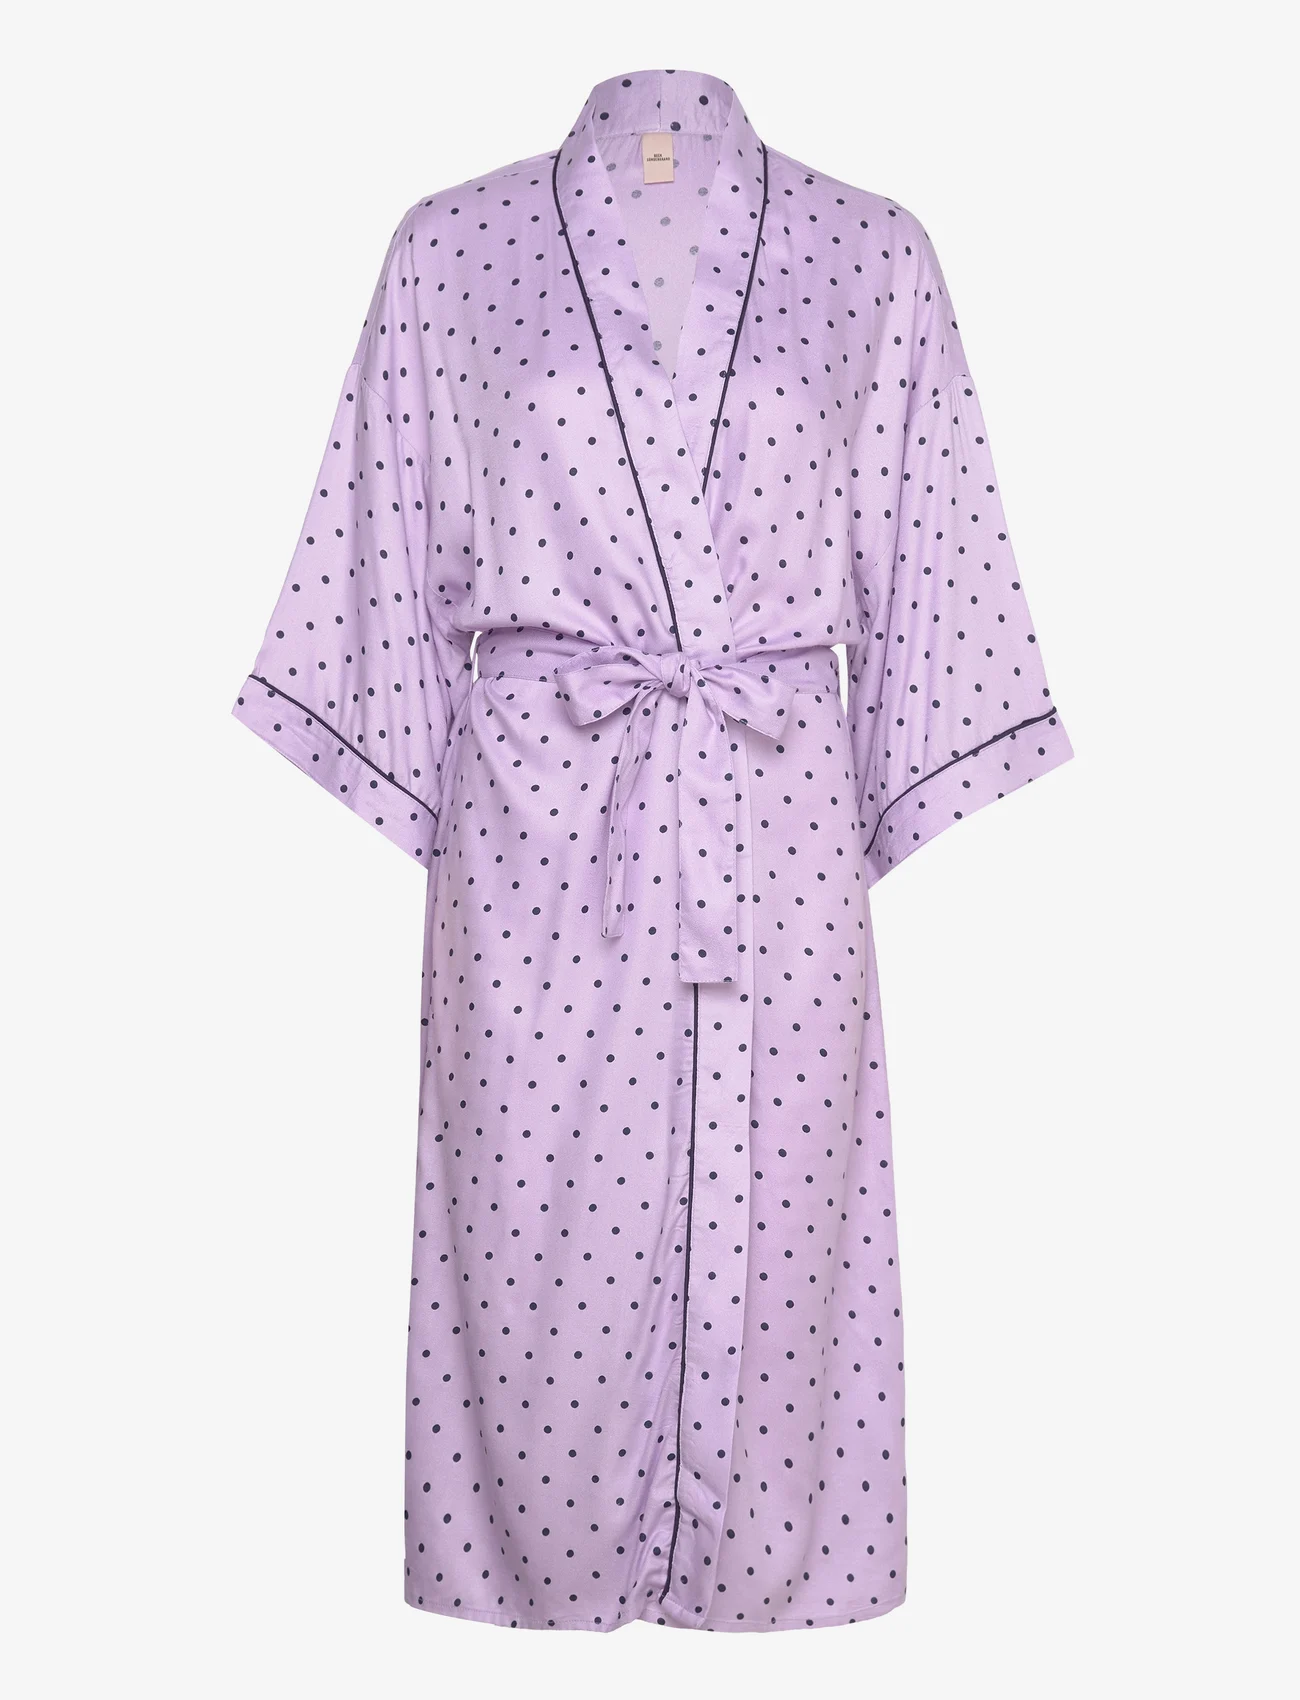 Becksöndergaard - Dot Liberte Kimono - prezenty urodzinowe - paisley purple - 0